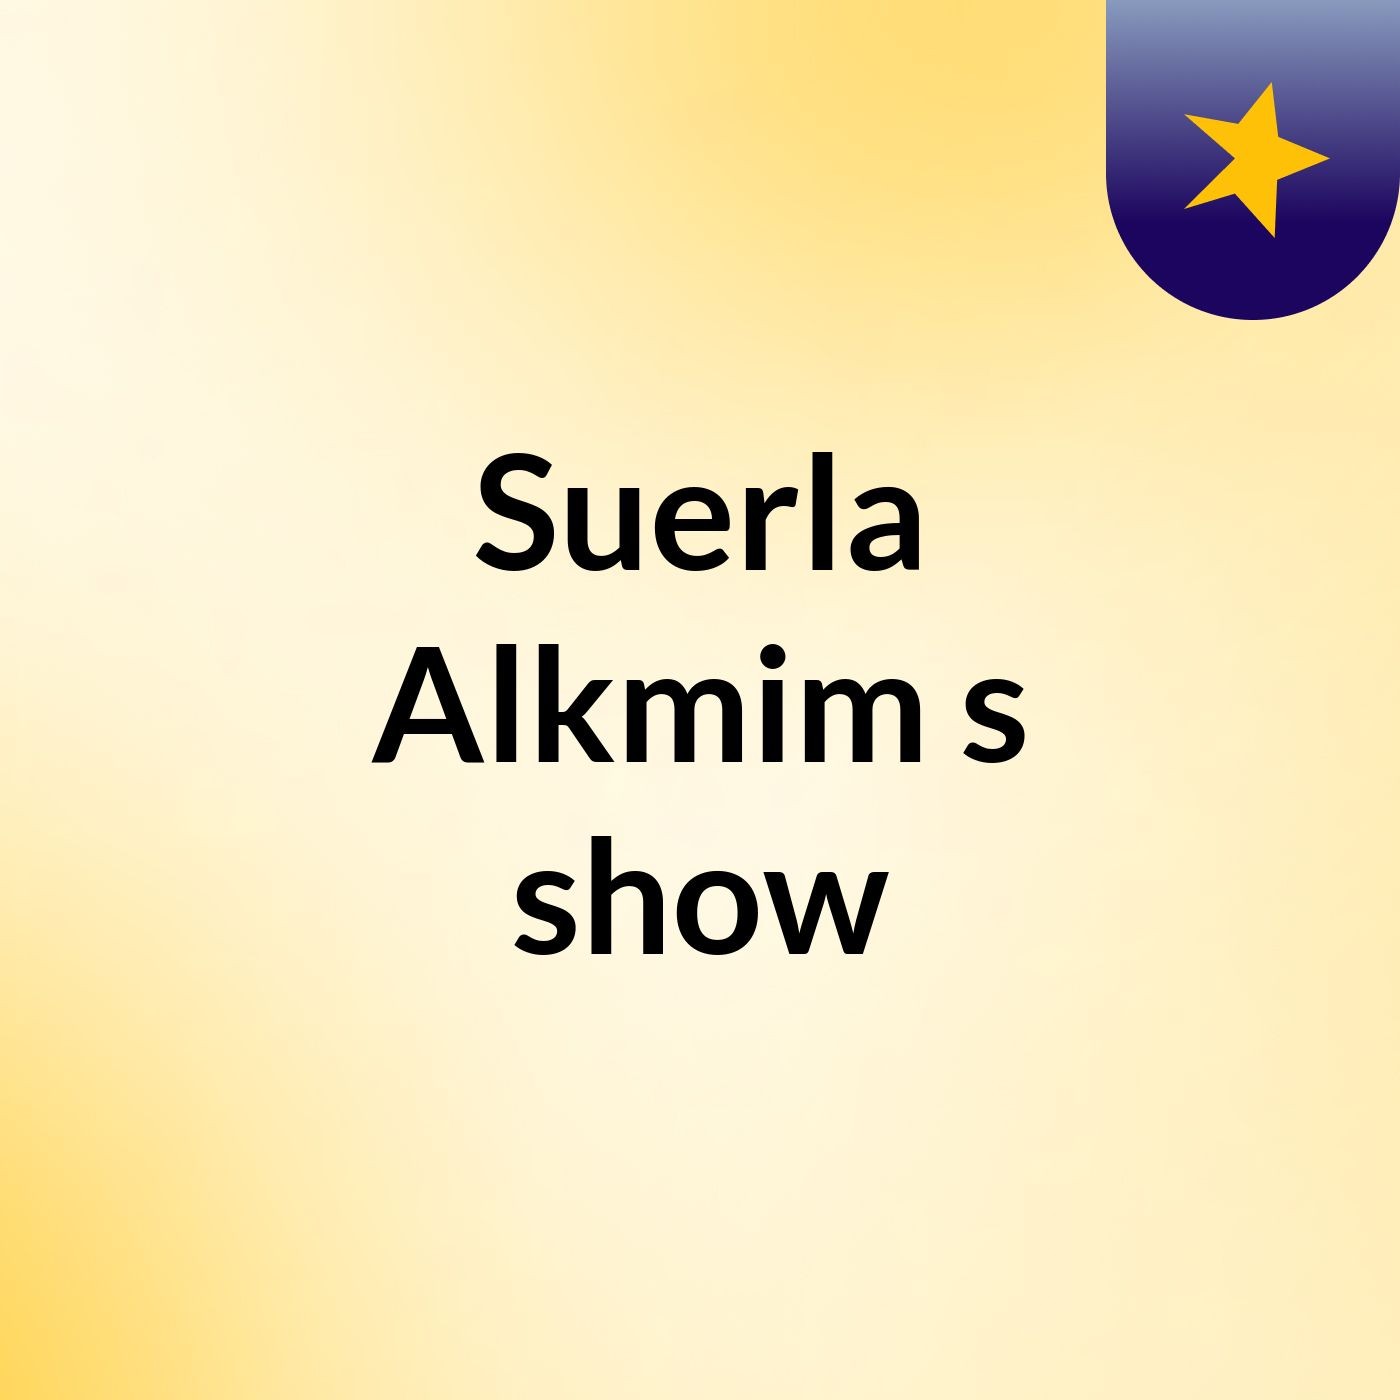 Suerla Alkmim's show